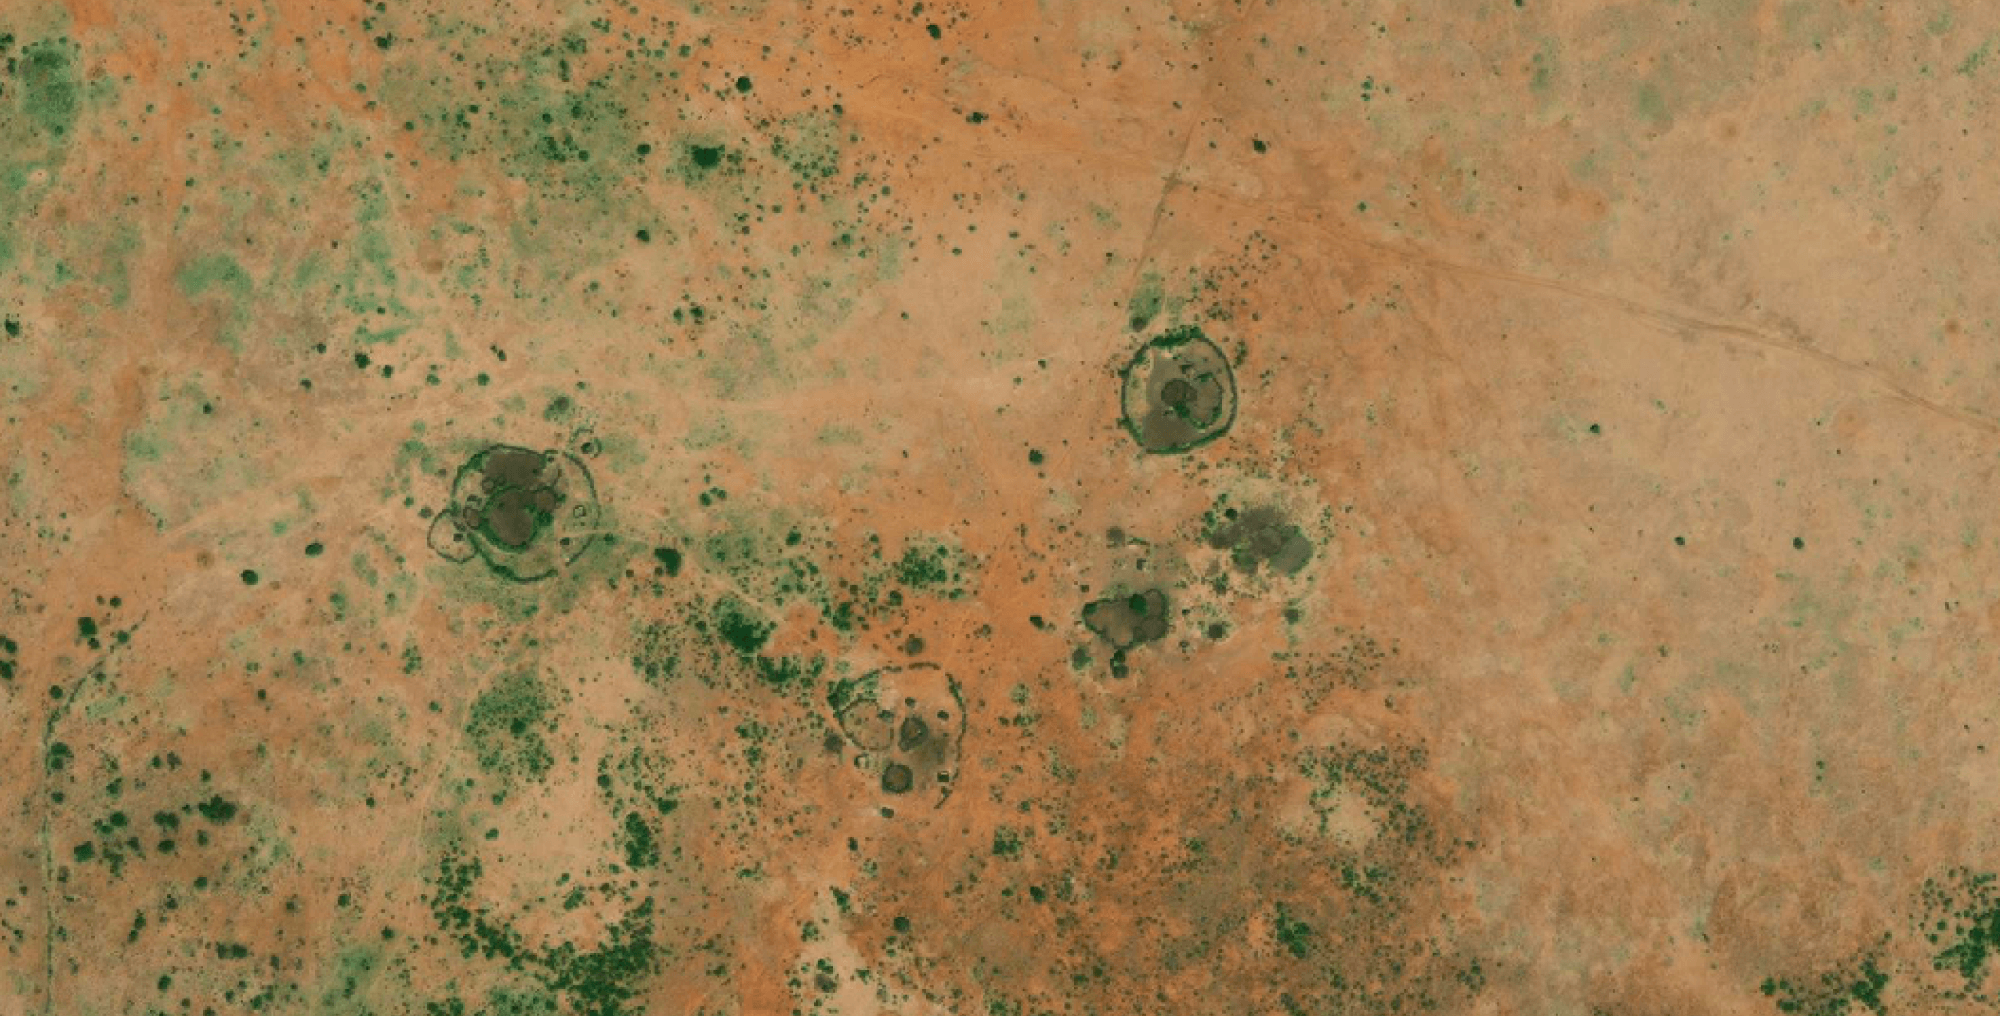 Satellite imagery of Kenya